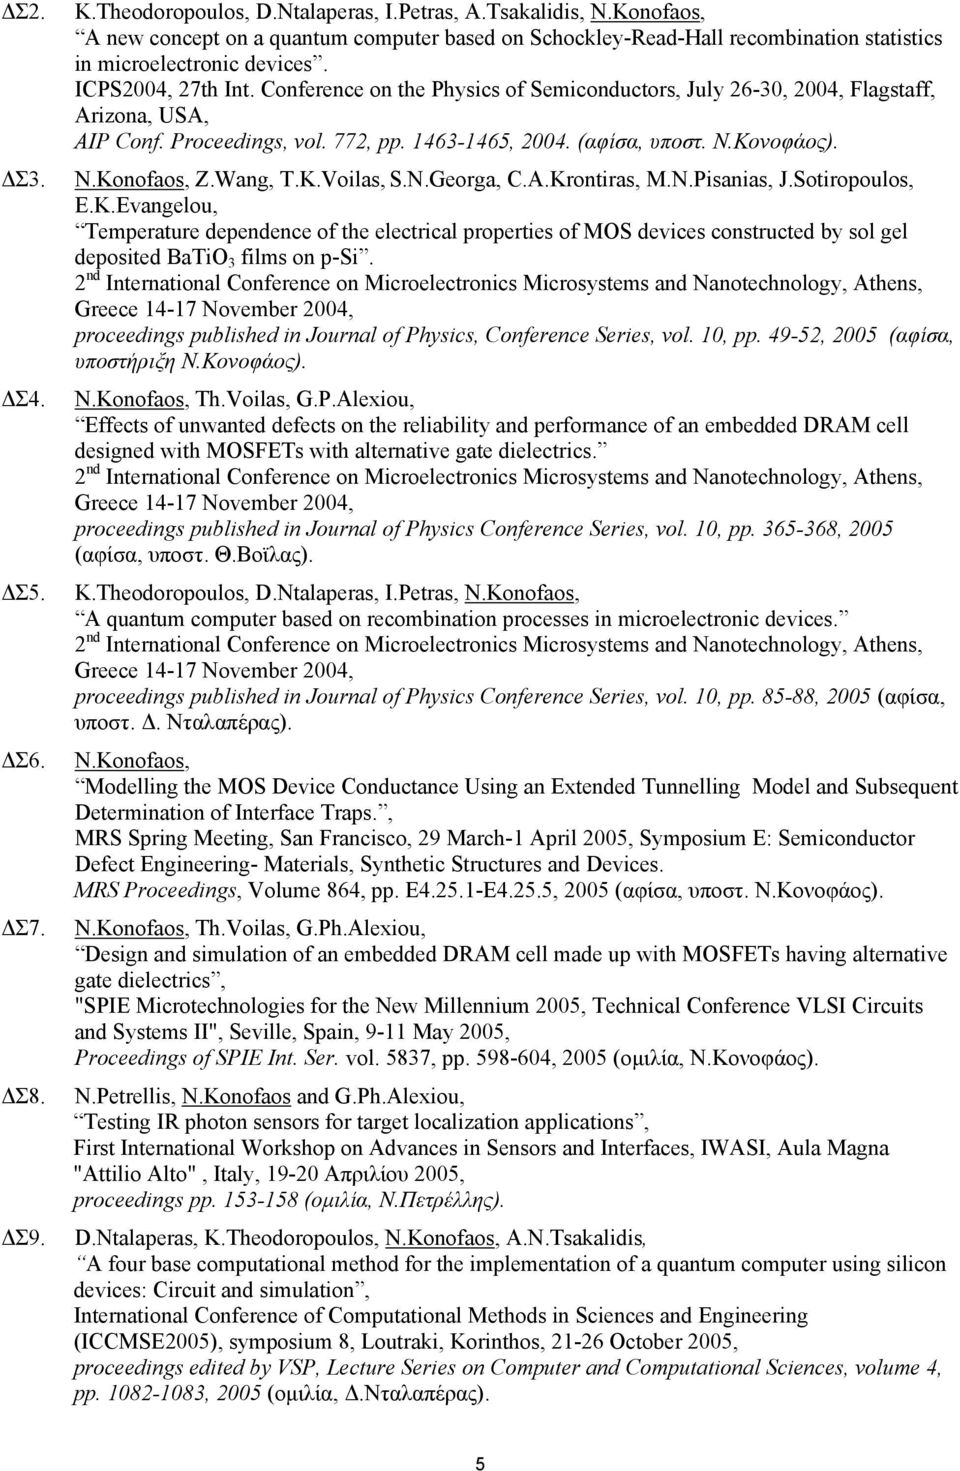 Conference on the Physics of Semiconductors, July 26-30, 2004, Flagstaff, Arizona, USA, AIP Conf. Proceedings, vol. 772, pp. 1463-1465, 2004. (αφίσα, υποστ. Ν.Κονοφάος). N.Konofaos, Z.Wang, T.Κ.Voilas, S.